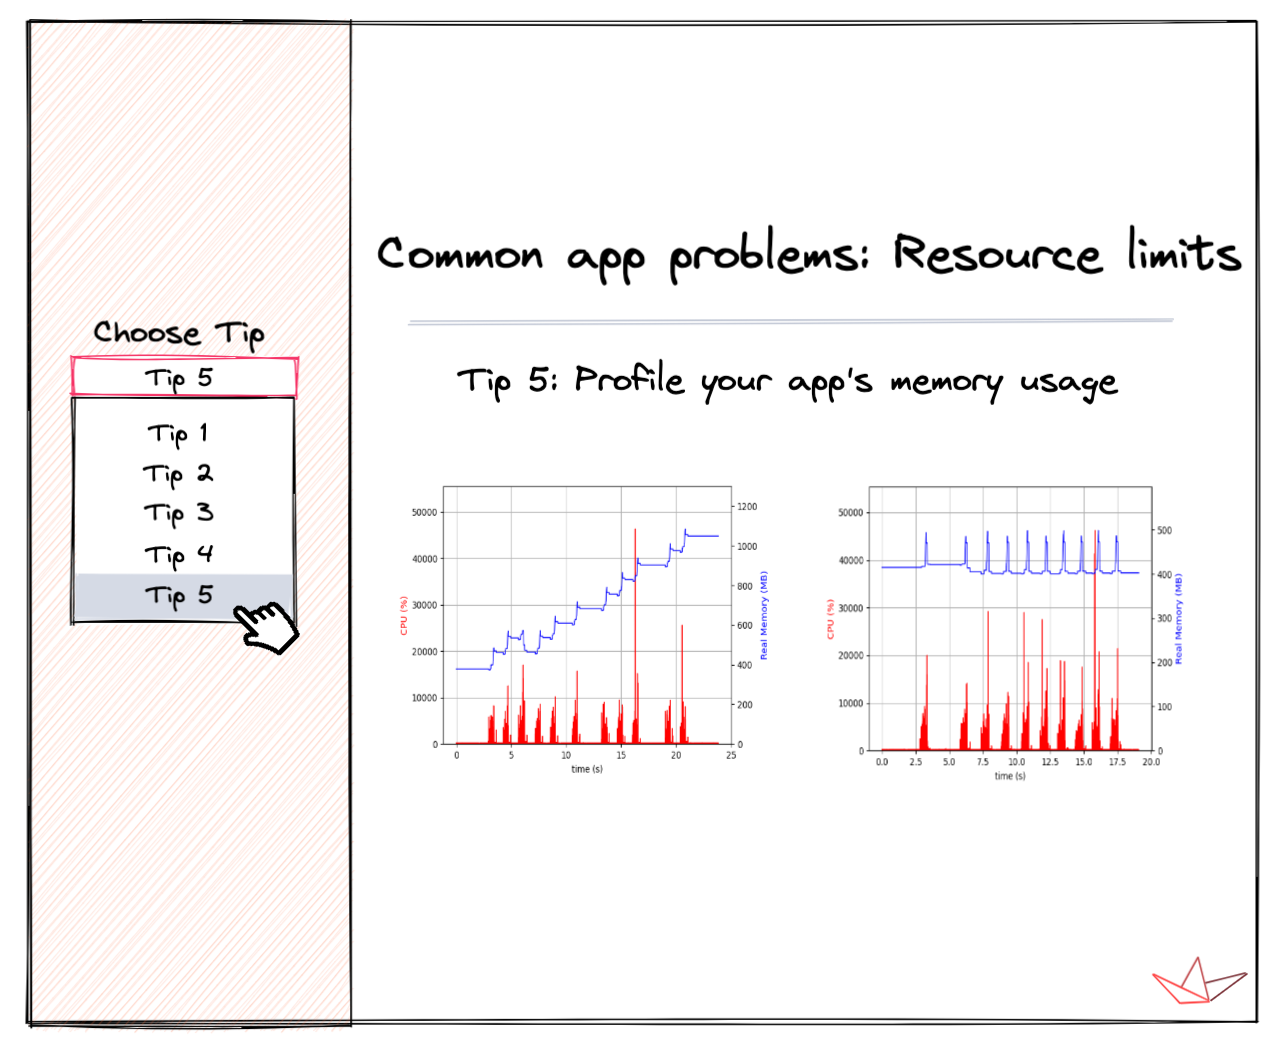 Common app problems: Resource limits